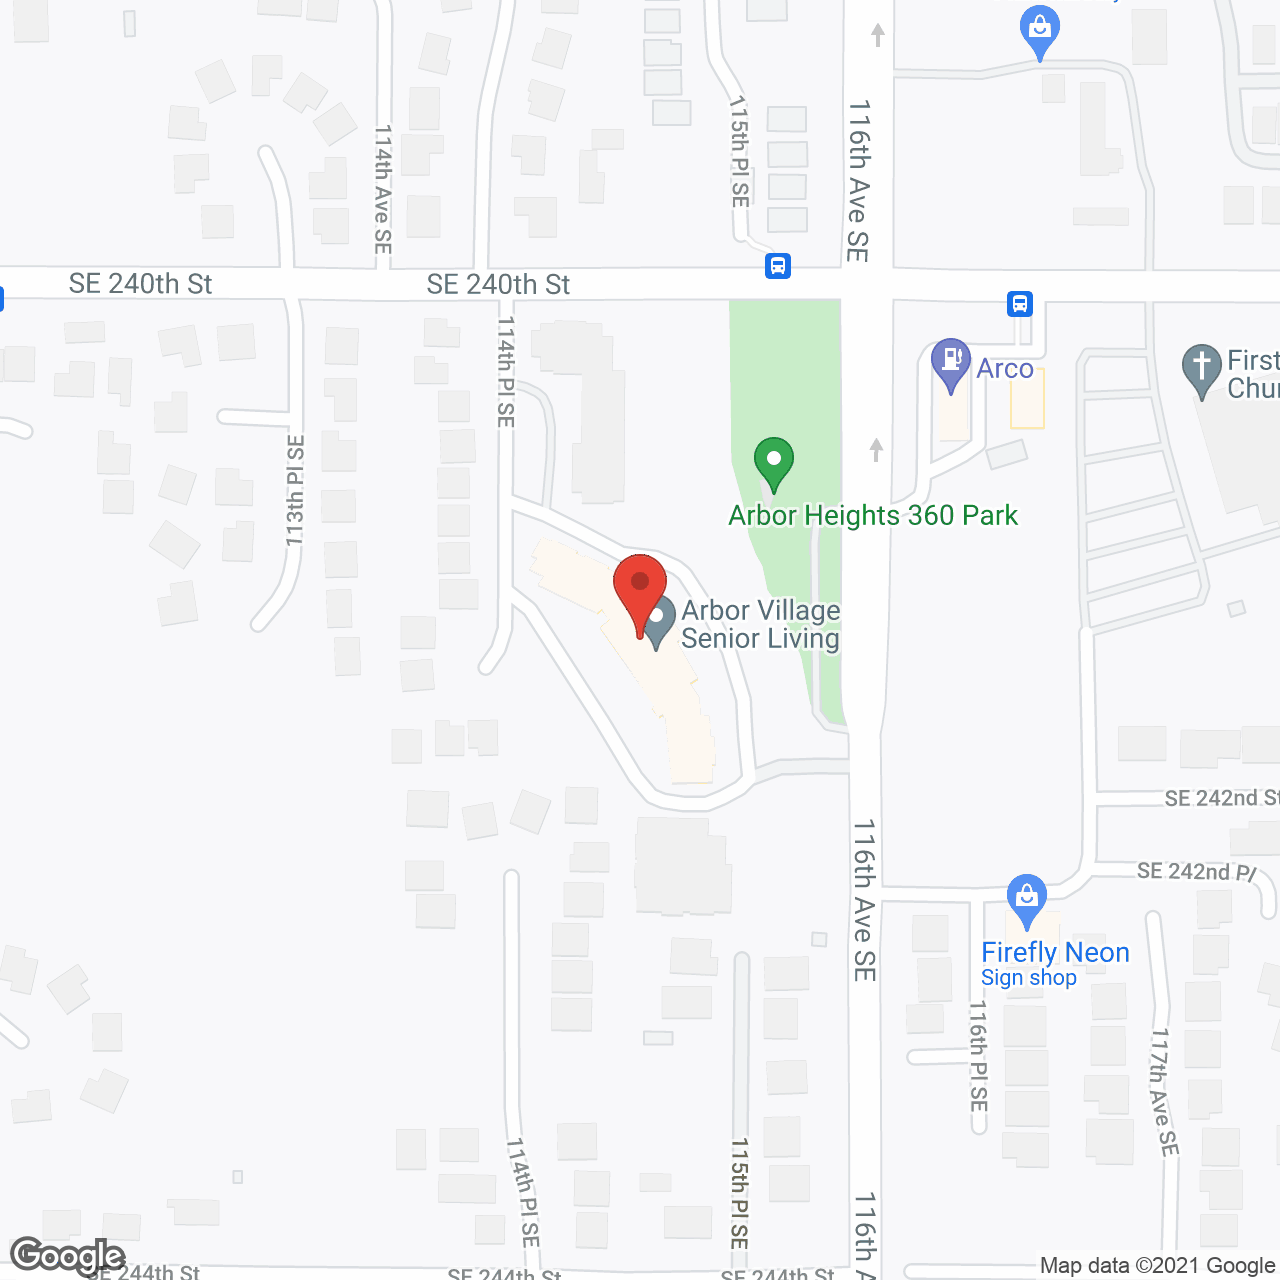 Arbor Village in google map